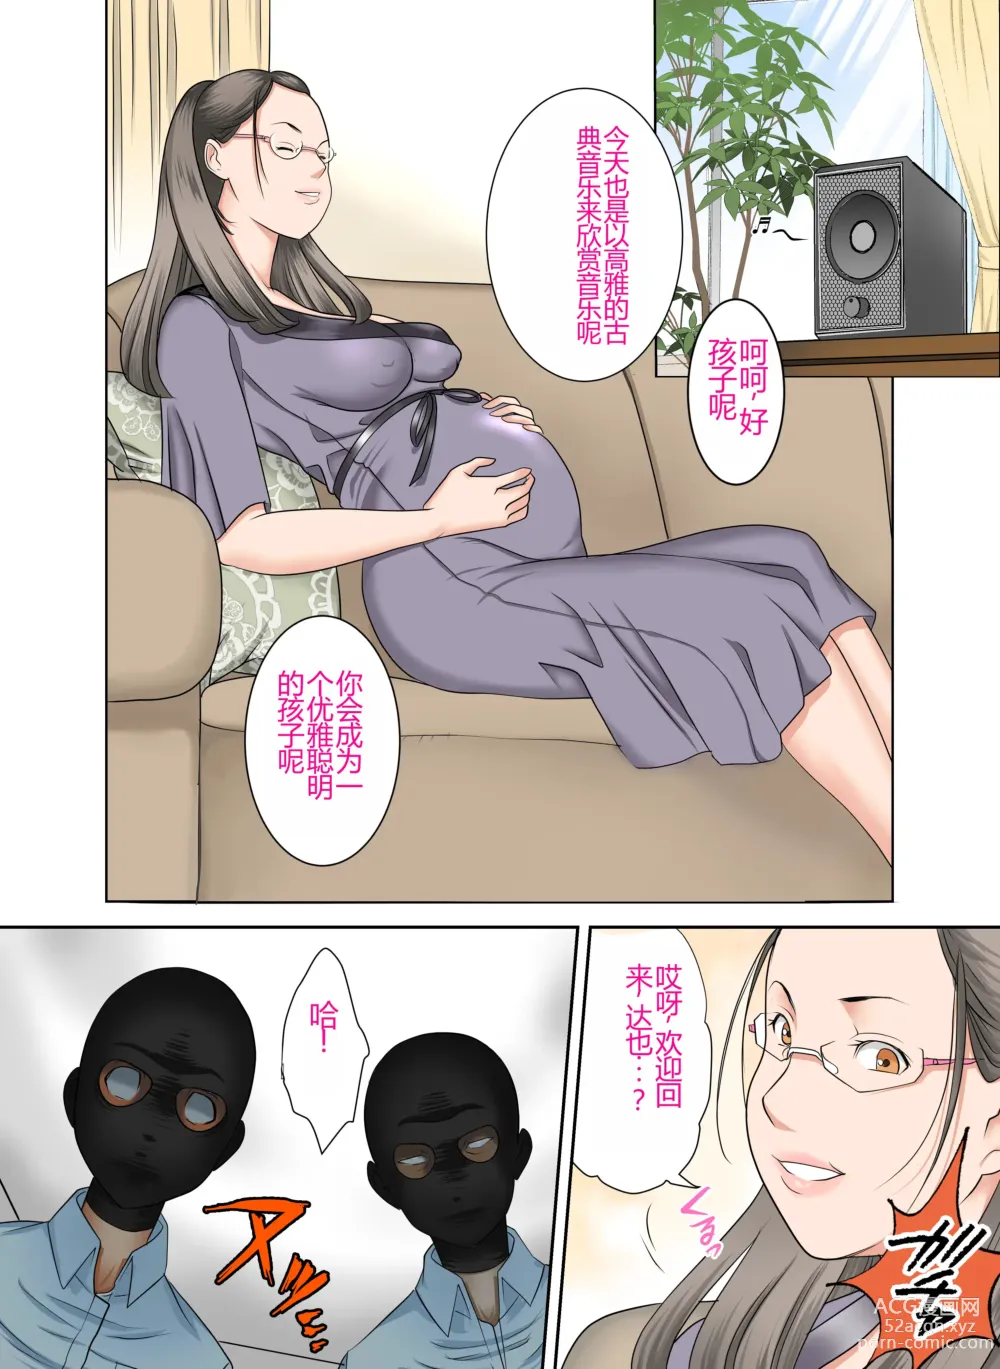 Page 5 of doujinshi #Ninpu Kari 3